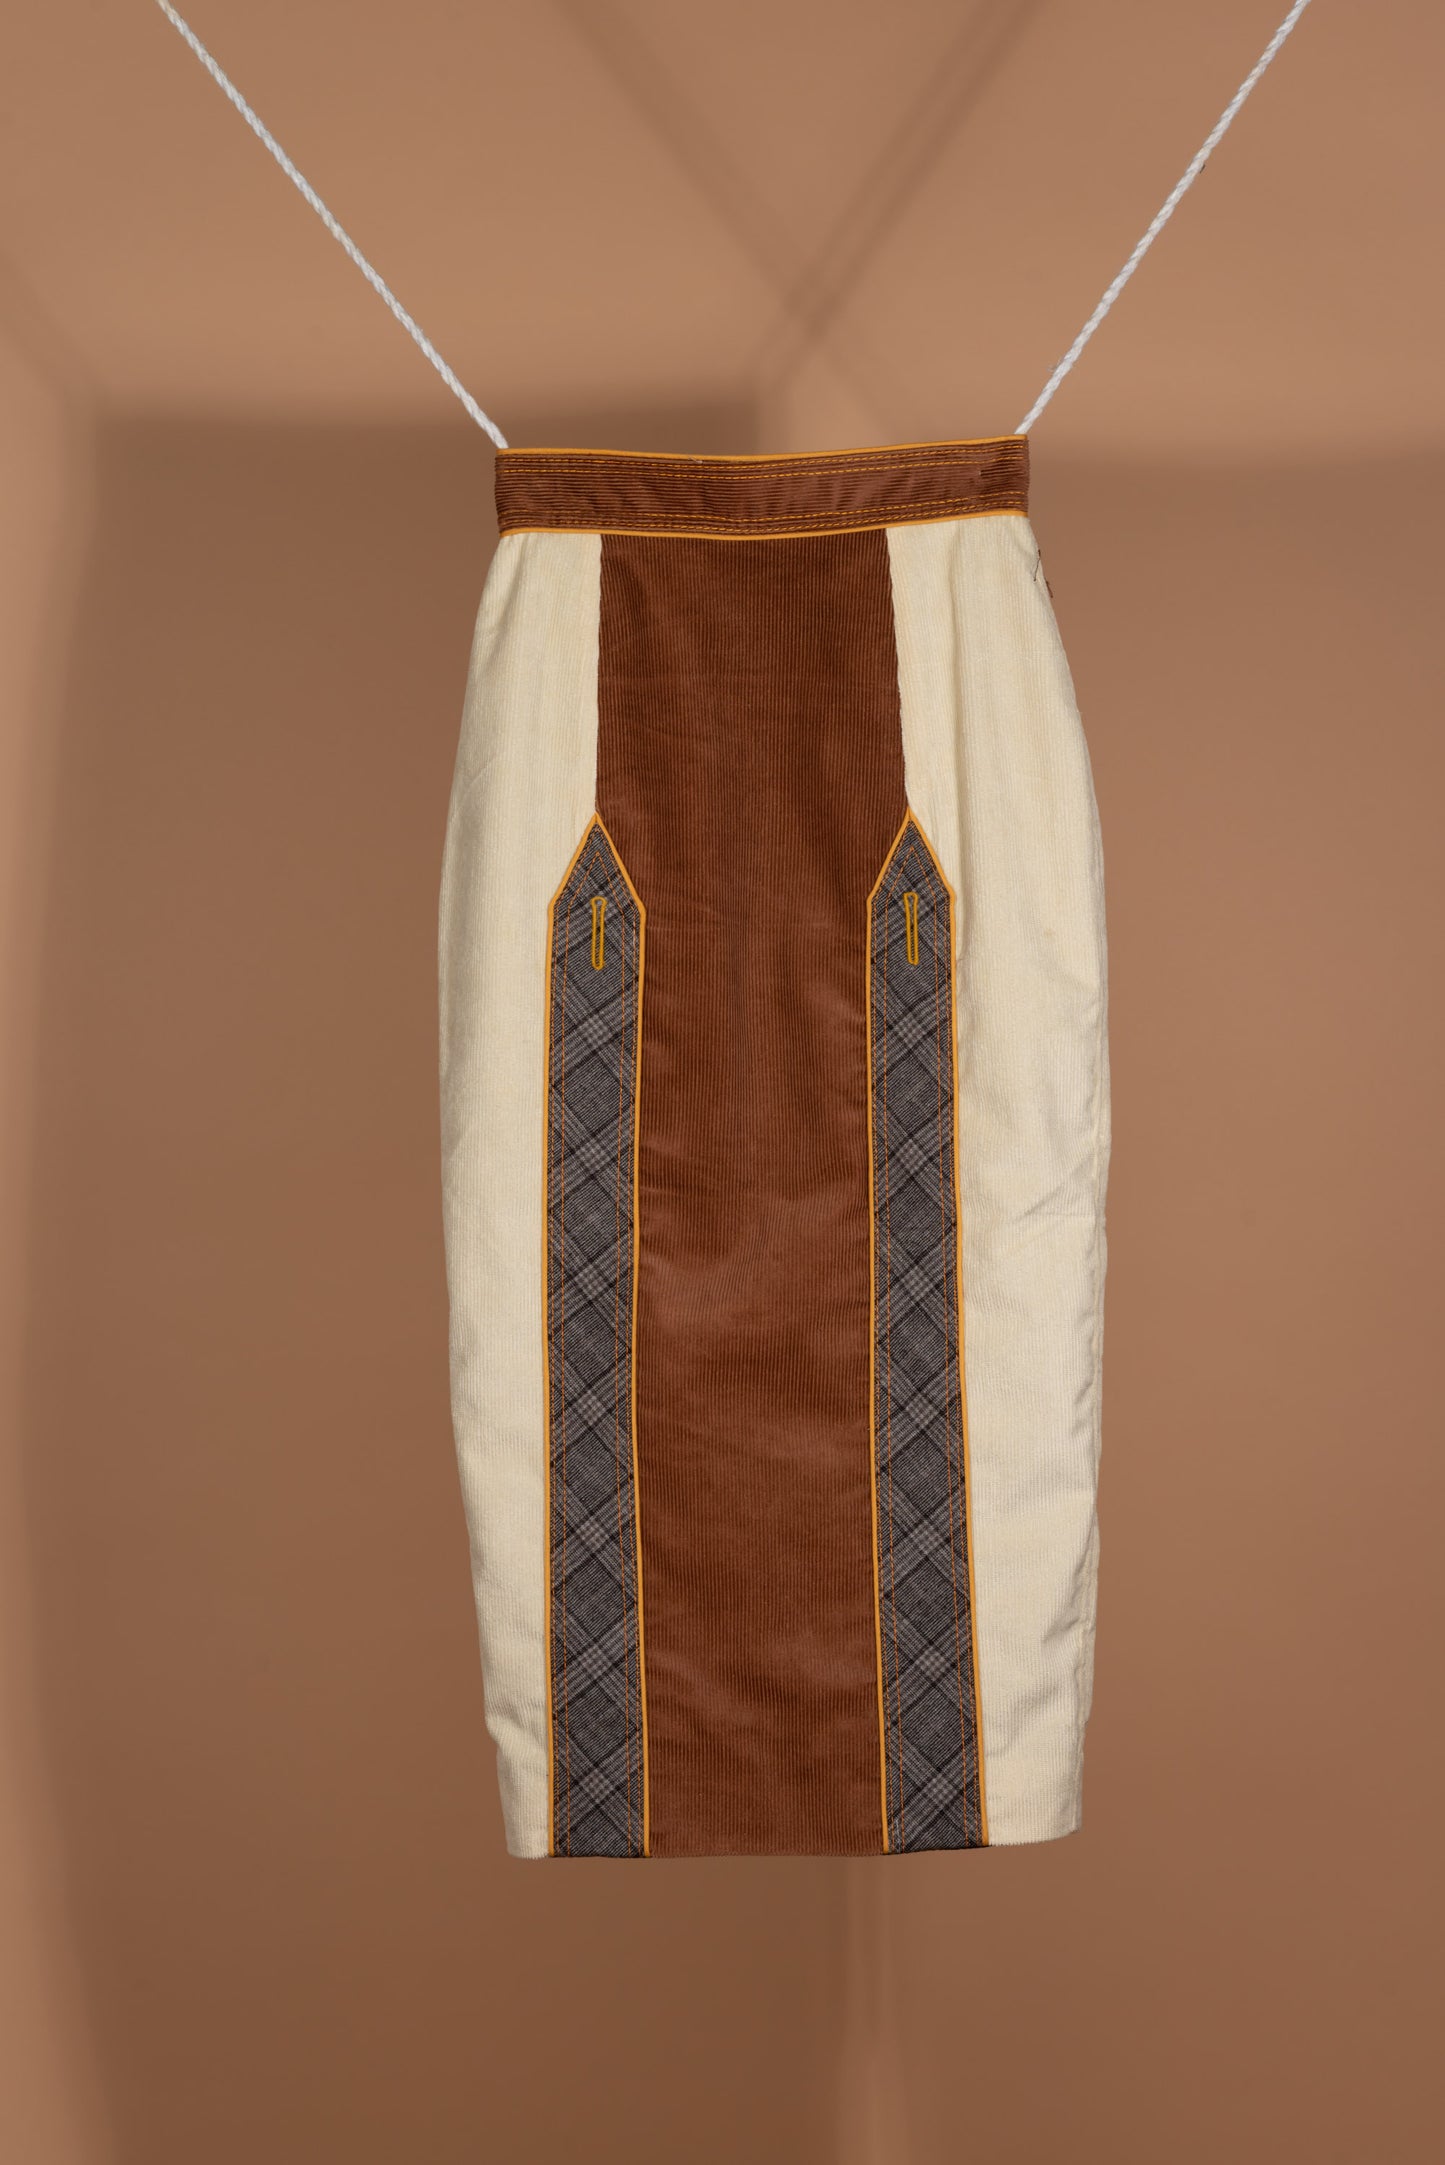 Suspender Skirt (cream choco)